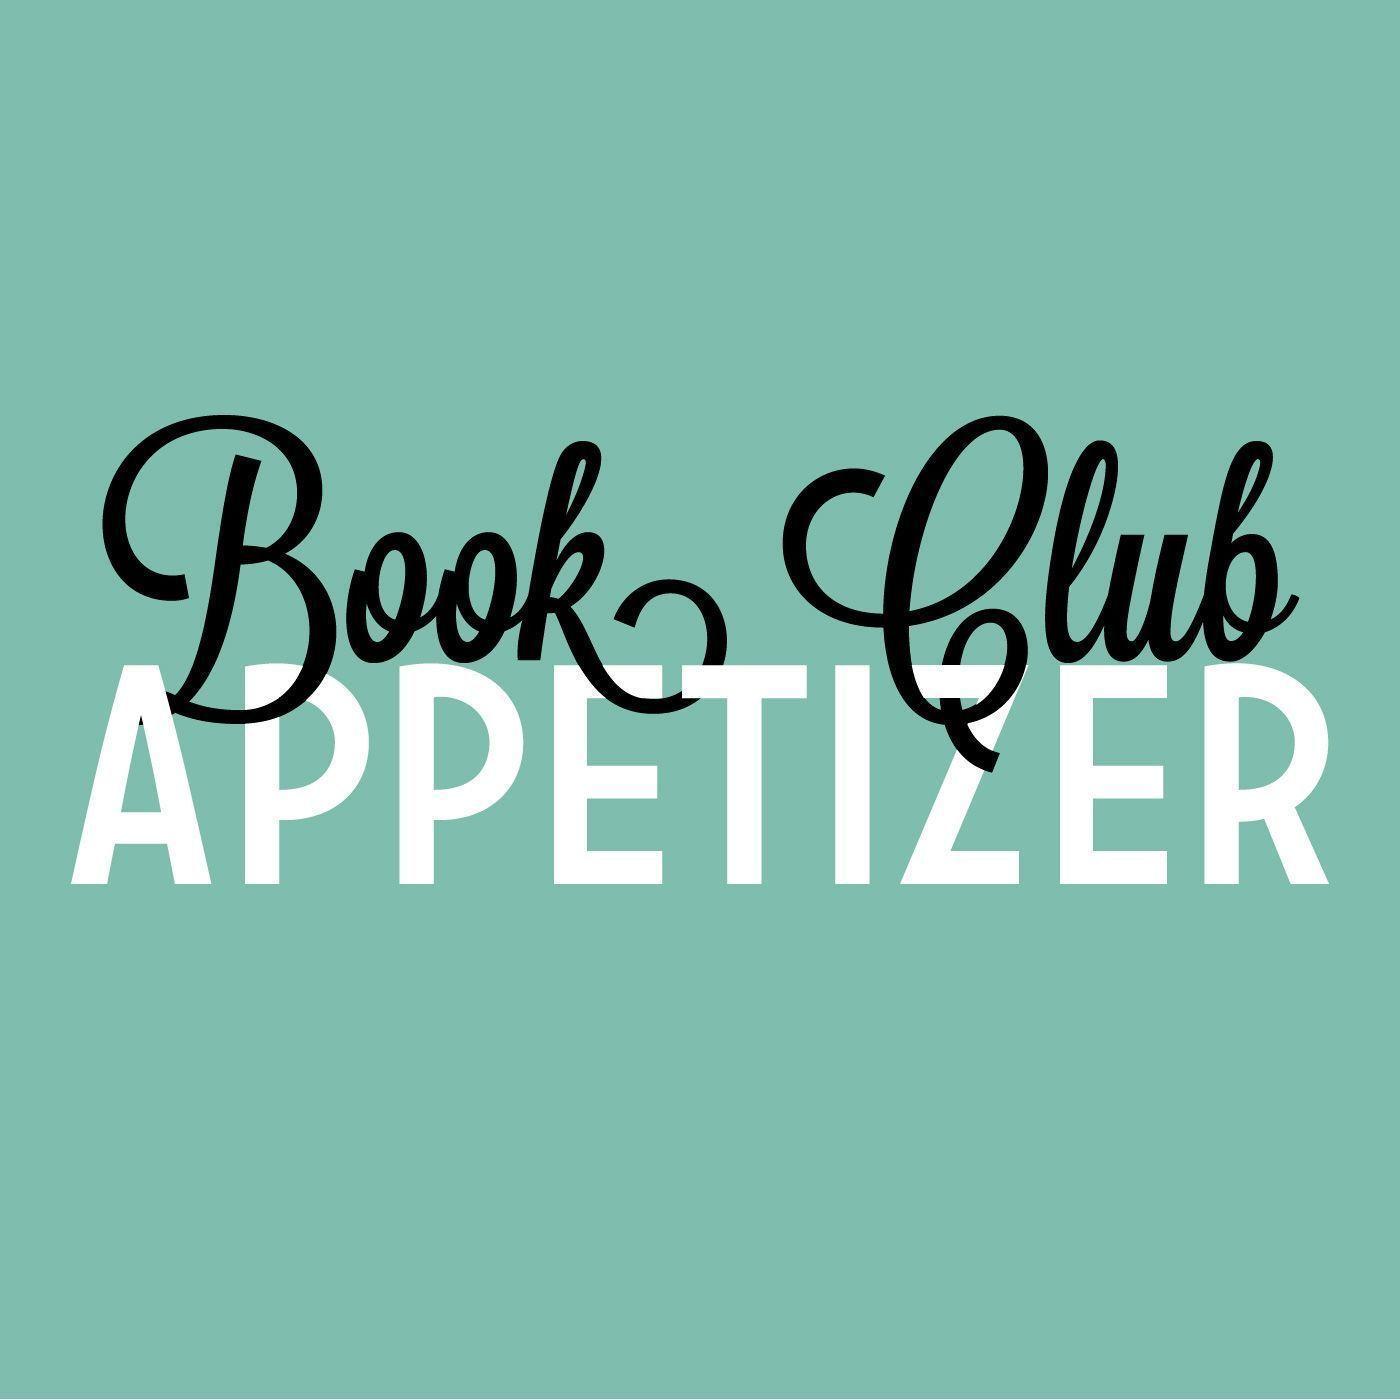 Appetizer Logo - pod|fanatic | Podcast: Book Club Appetizer